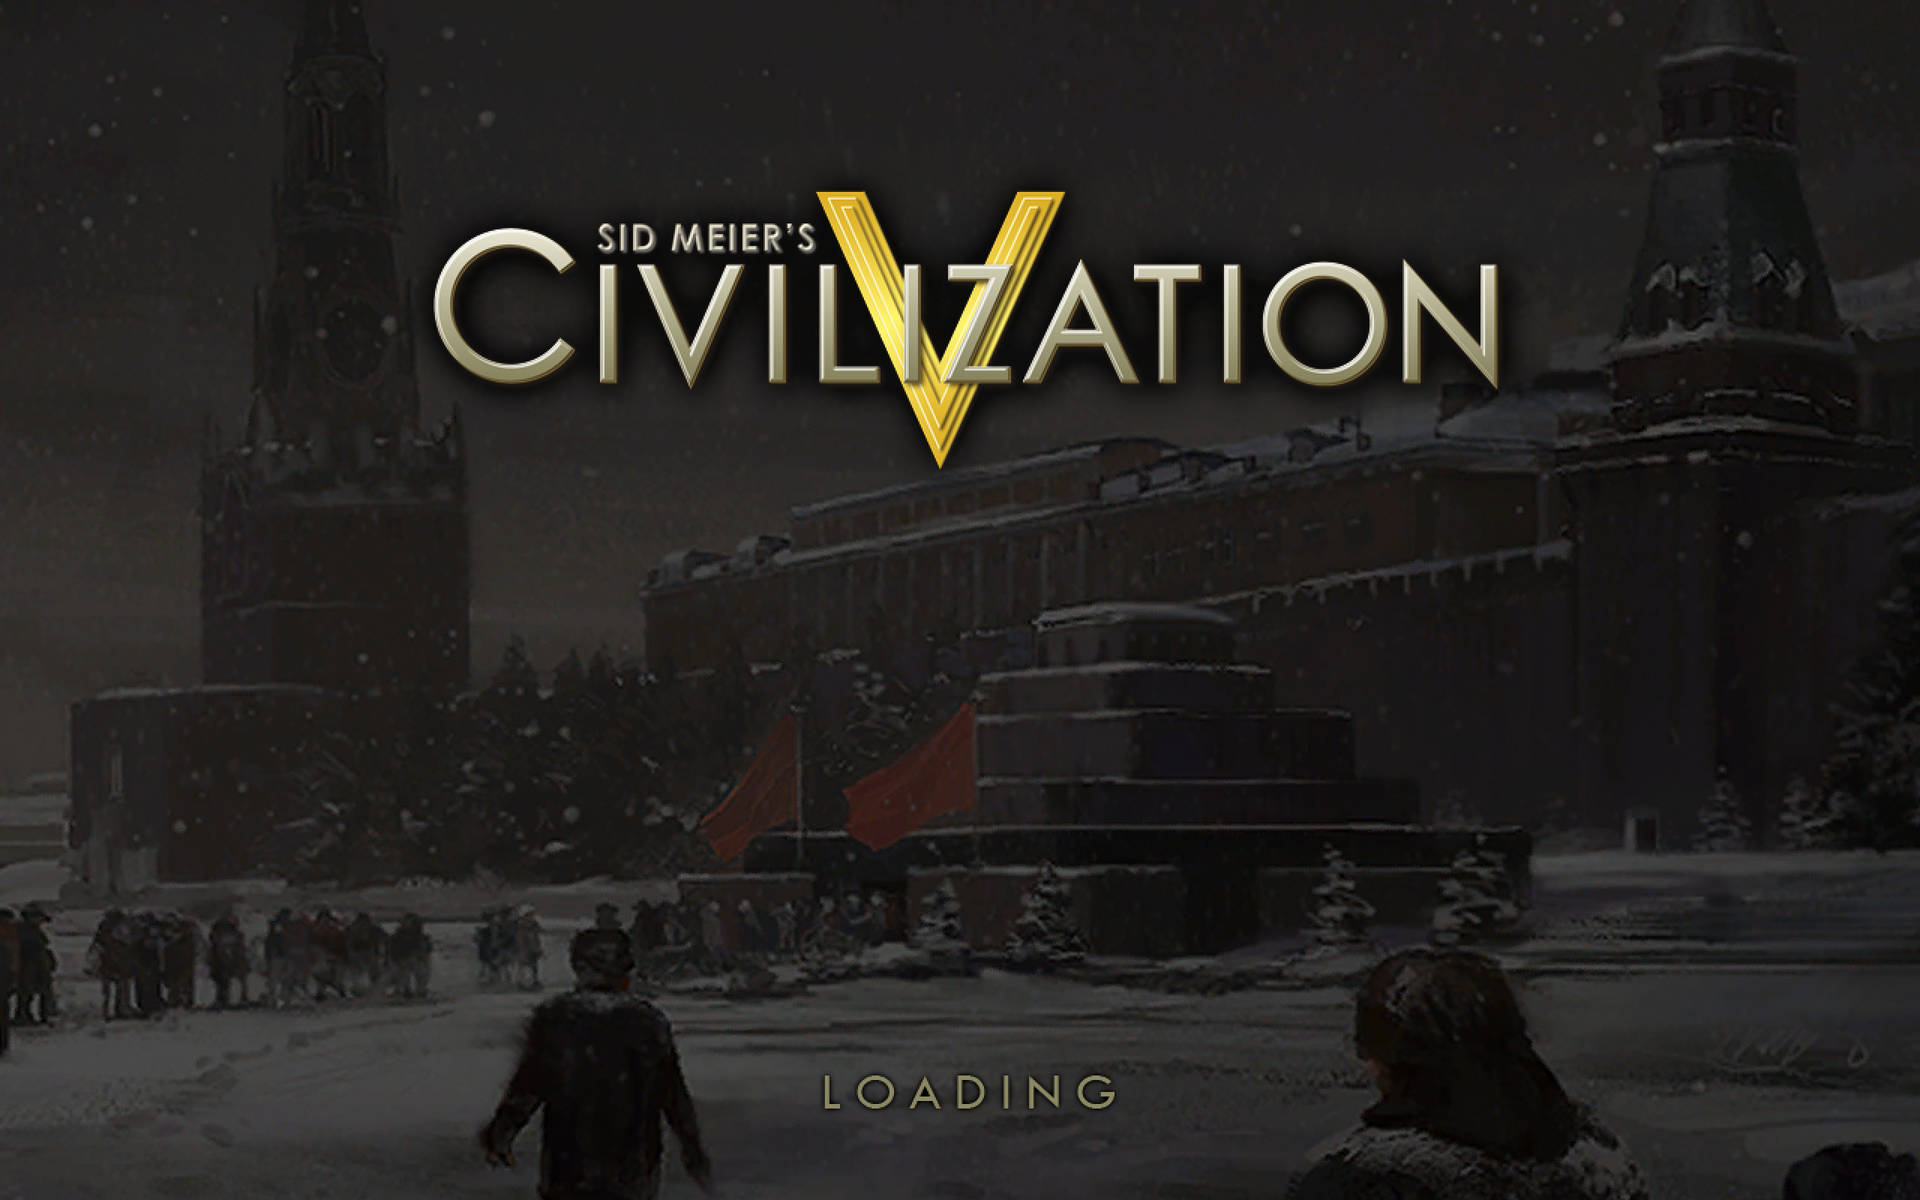 Loading Dark Civilization 5